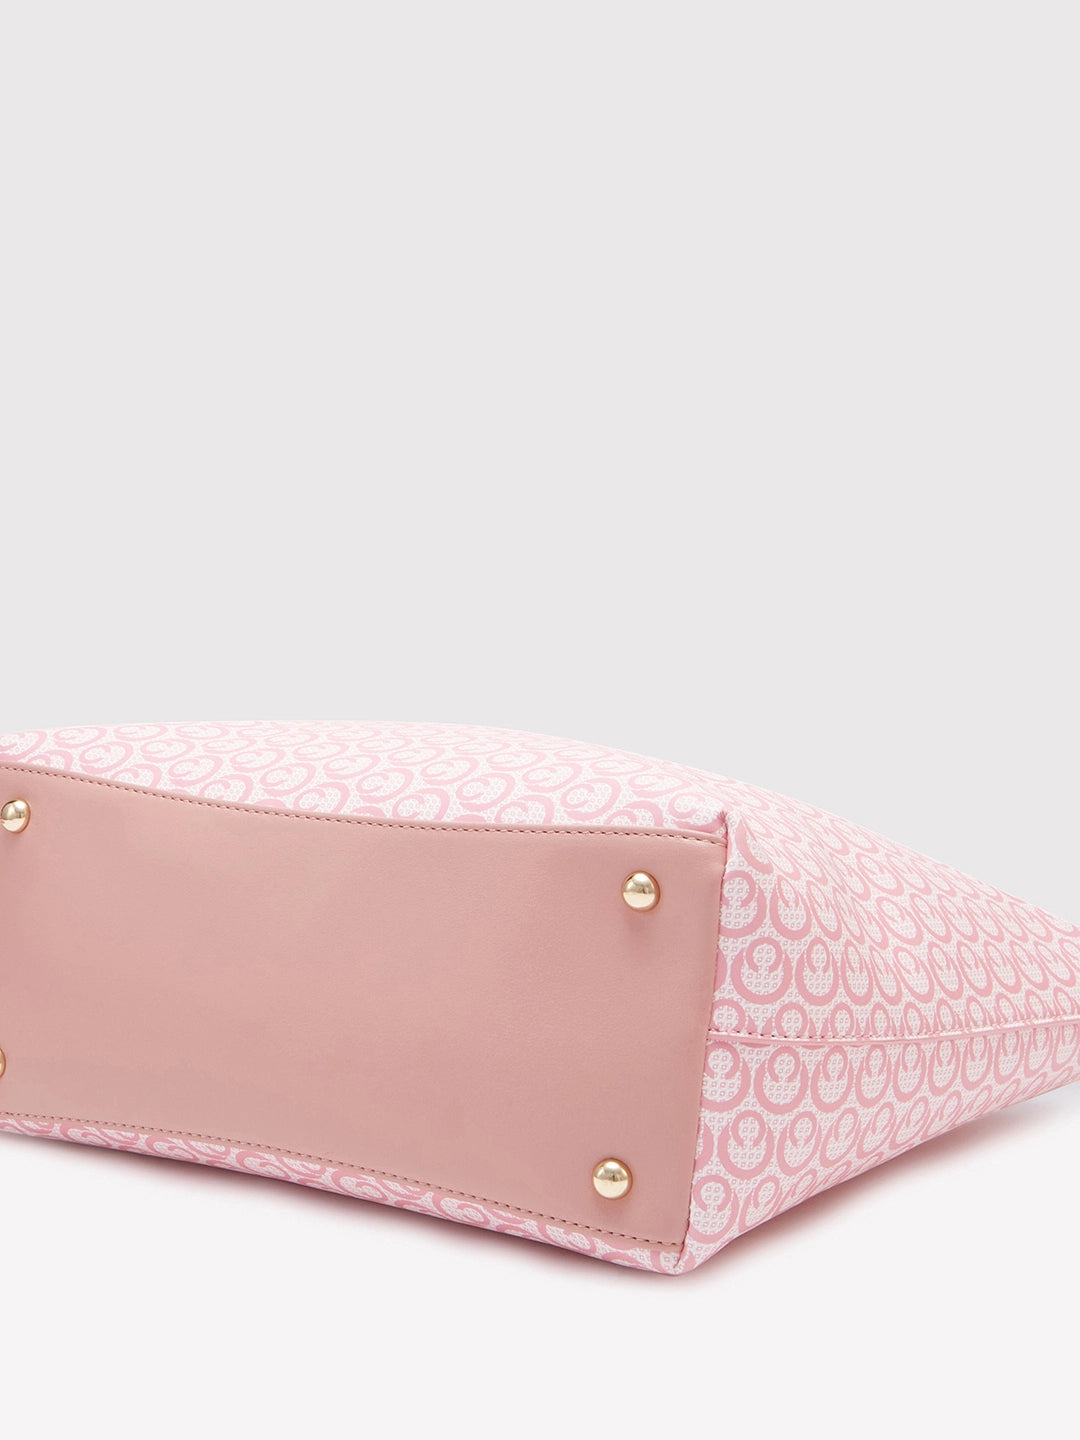 Women Tote Bag Purse Large Faux Leather Shoulder Bag Tassel Satchel  Handbags-Pink - Walmart.com